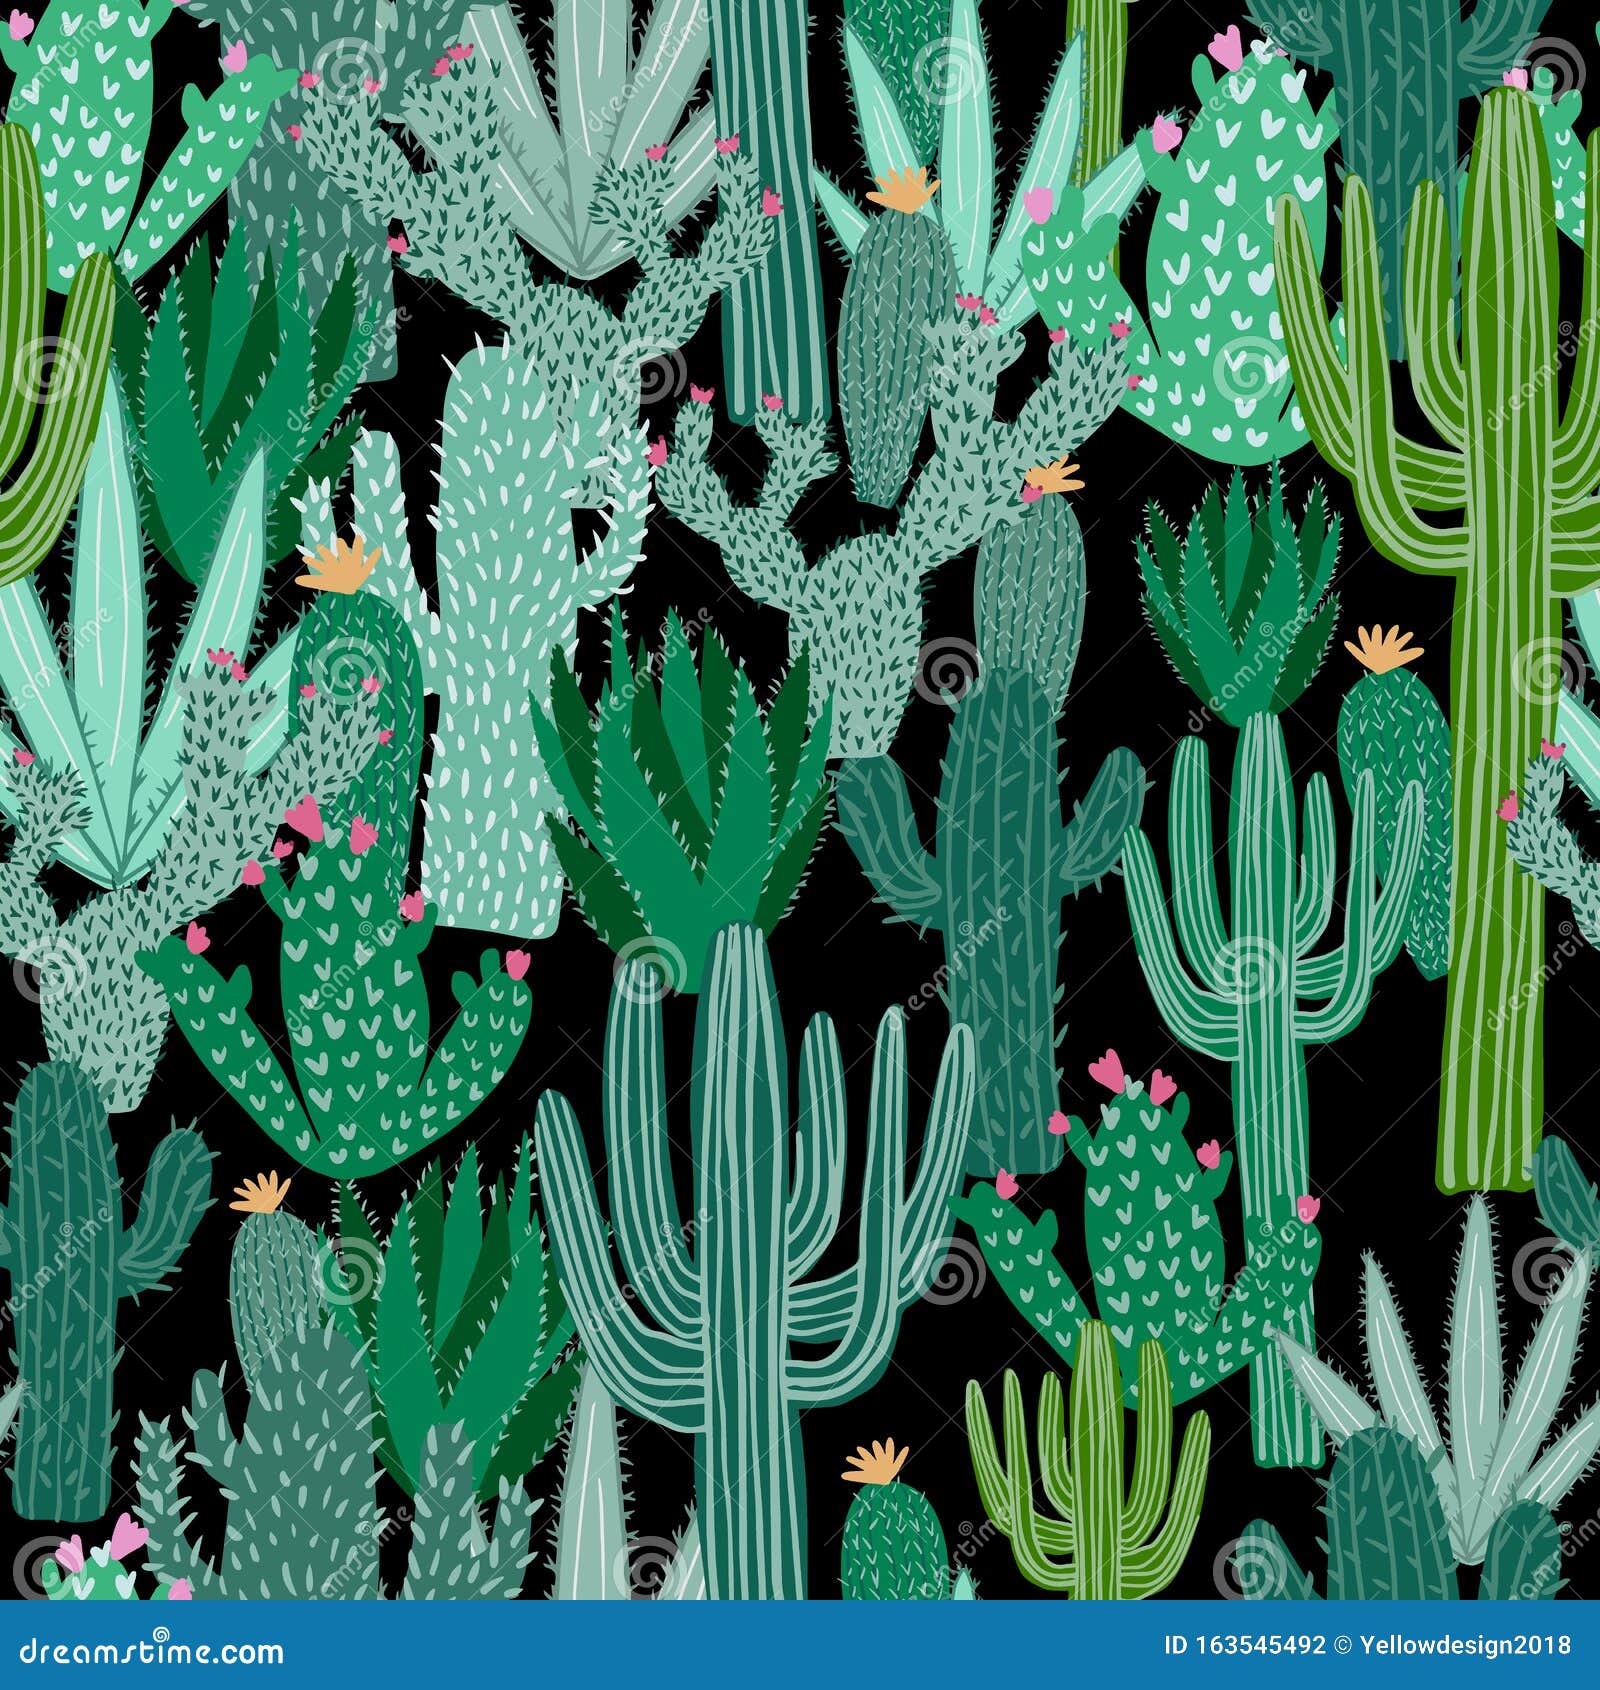 Catalogue 2015 ClippedOnIssuu  Watercolor art Watercolor cactus Pattern  illustration